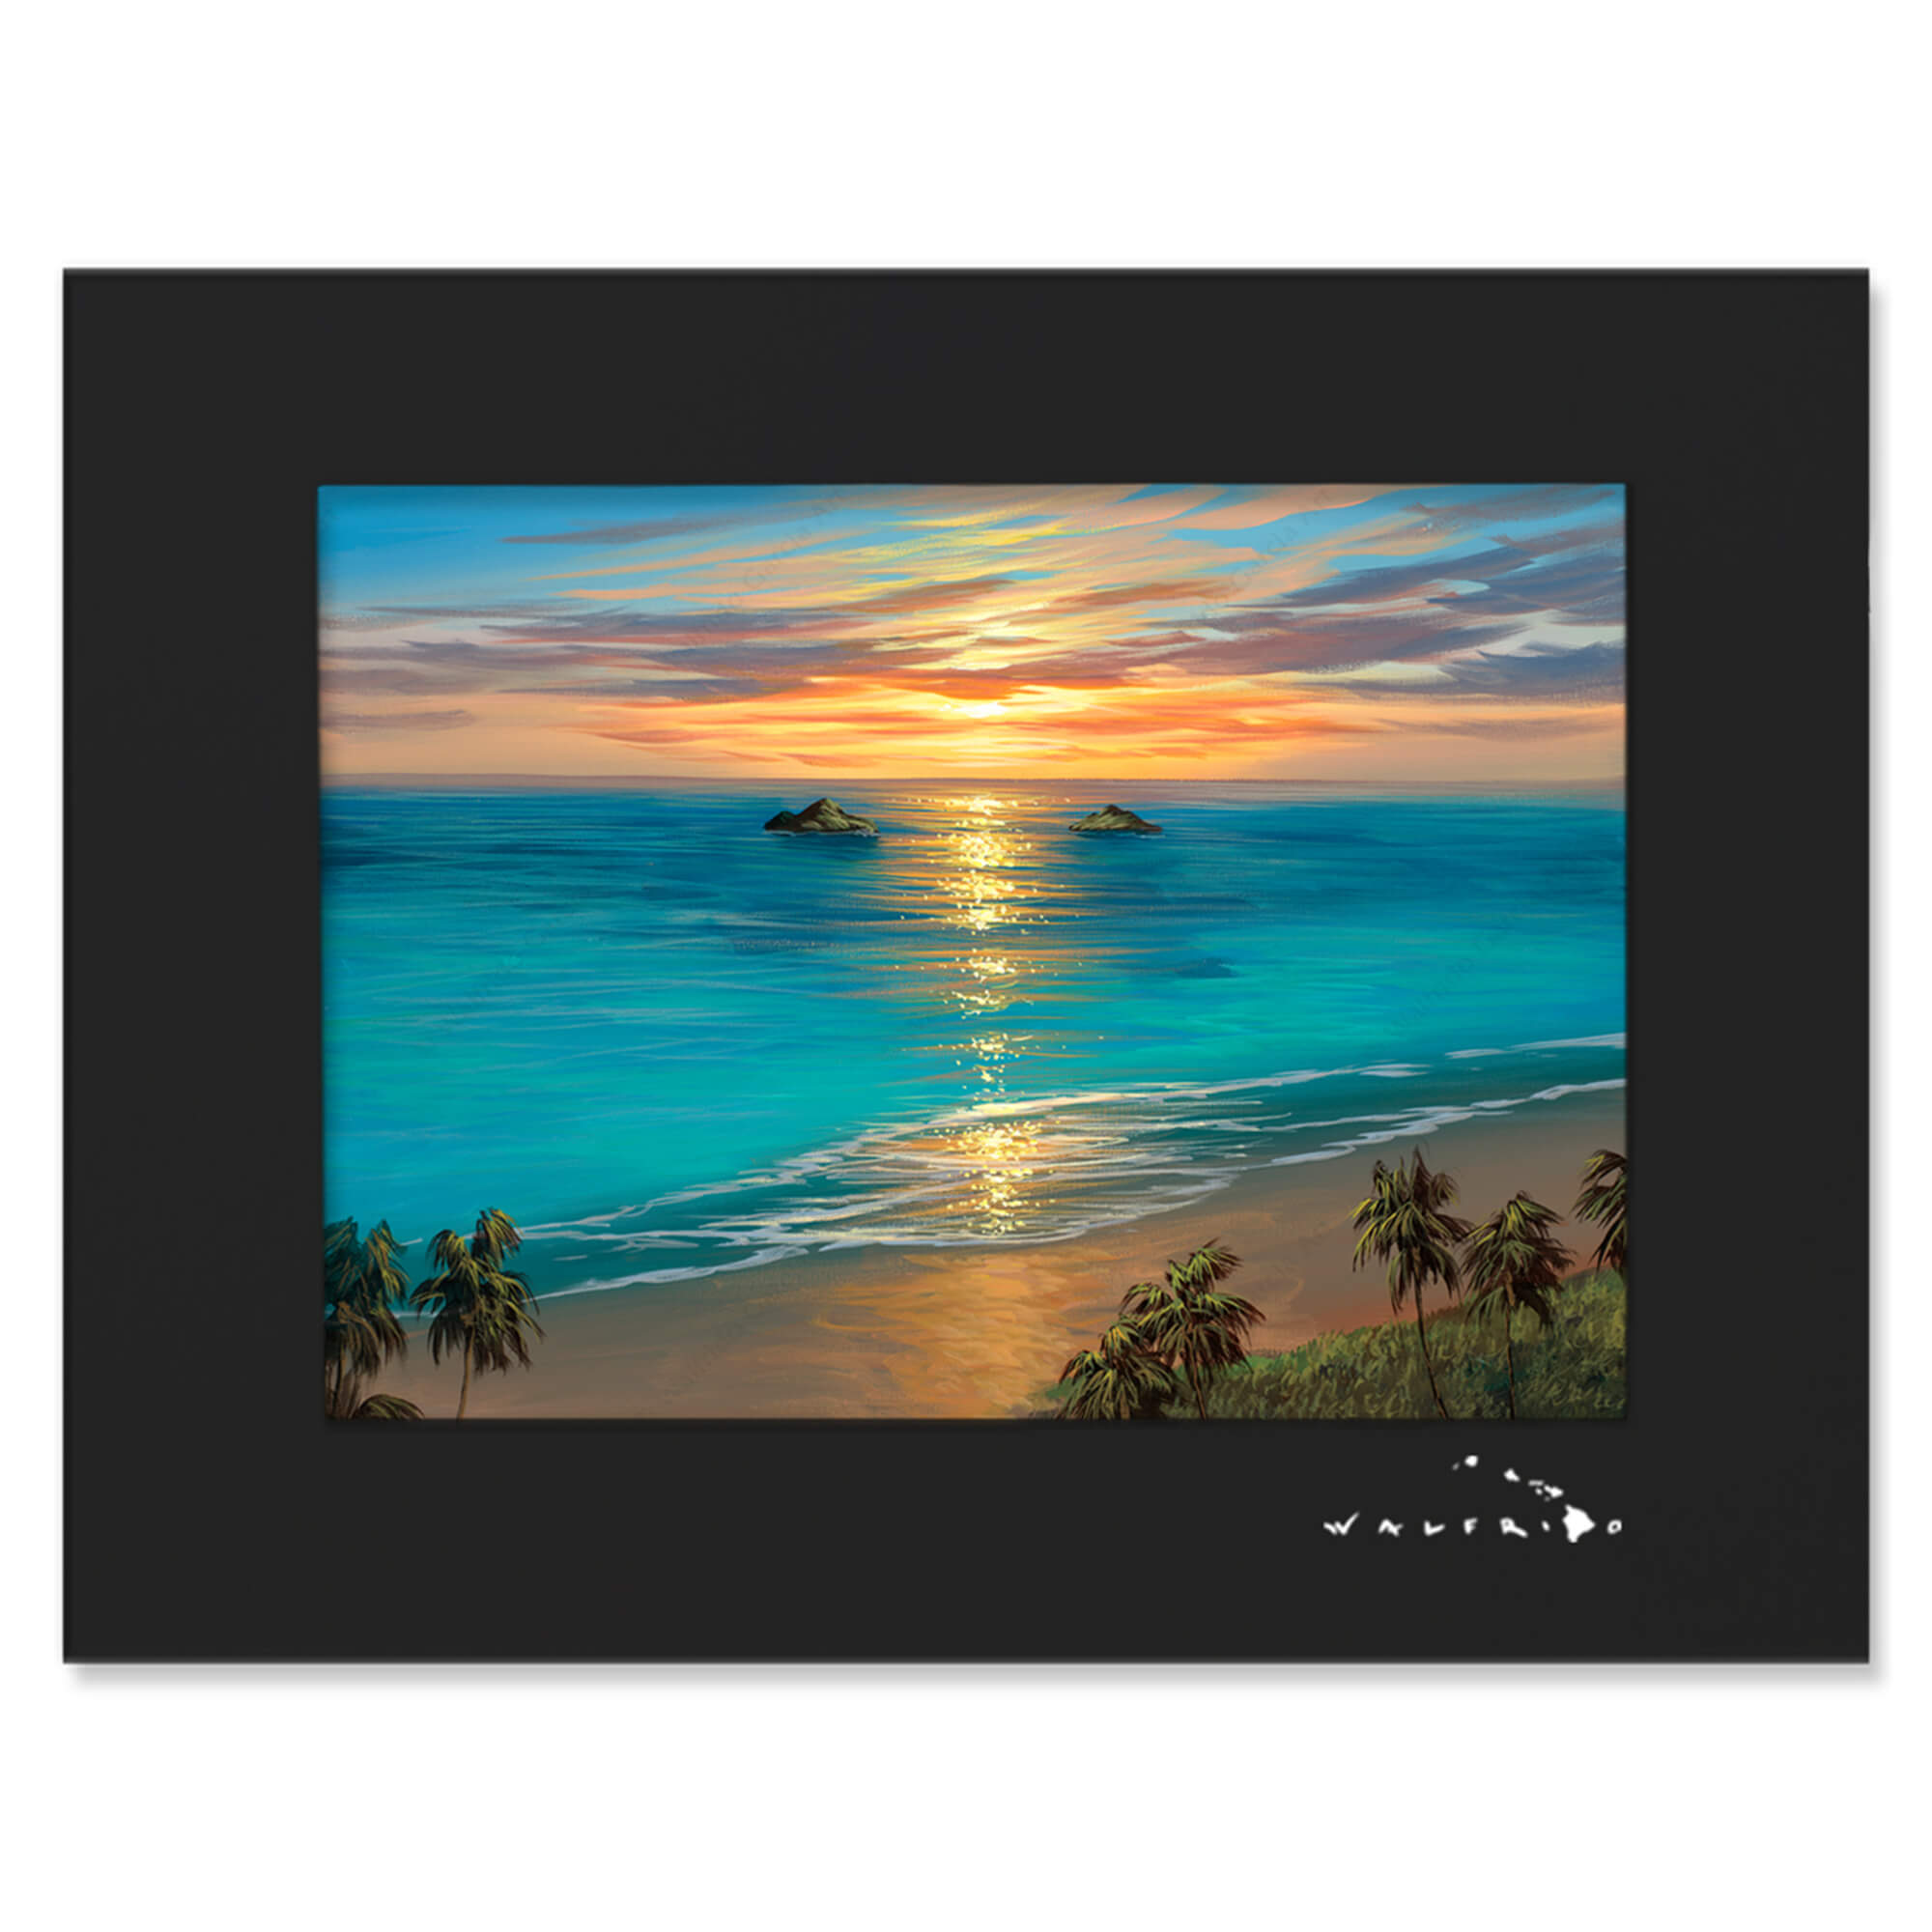 A matted art print matted art print depicting the sun rising behind the Mokolua Islands just off the coast of eastern Oahu's Lanikai Beach by Hawaii artist Walfrido Garcia